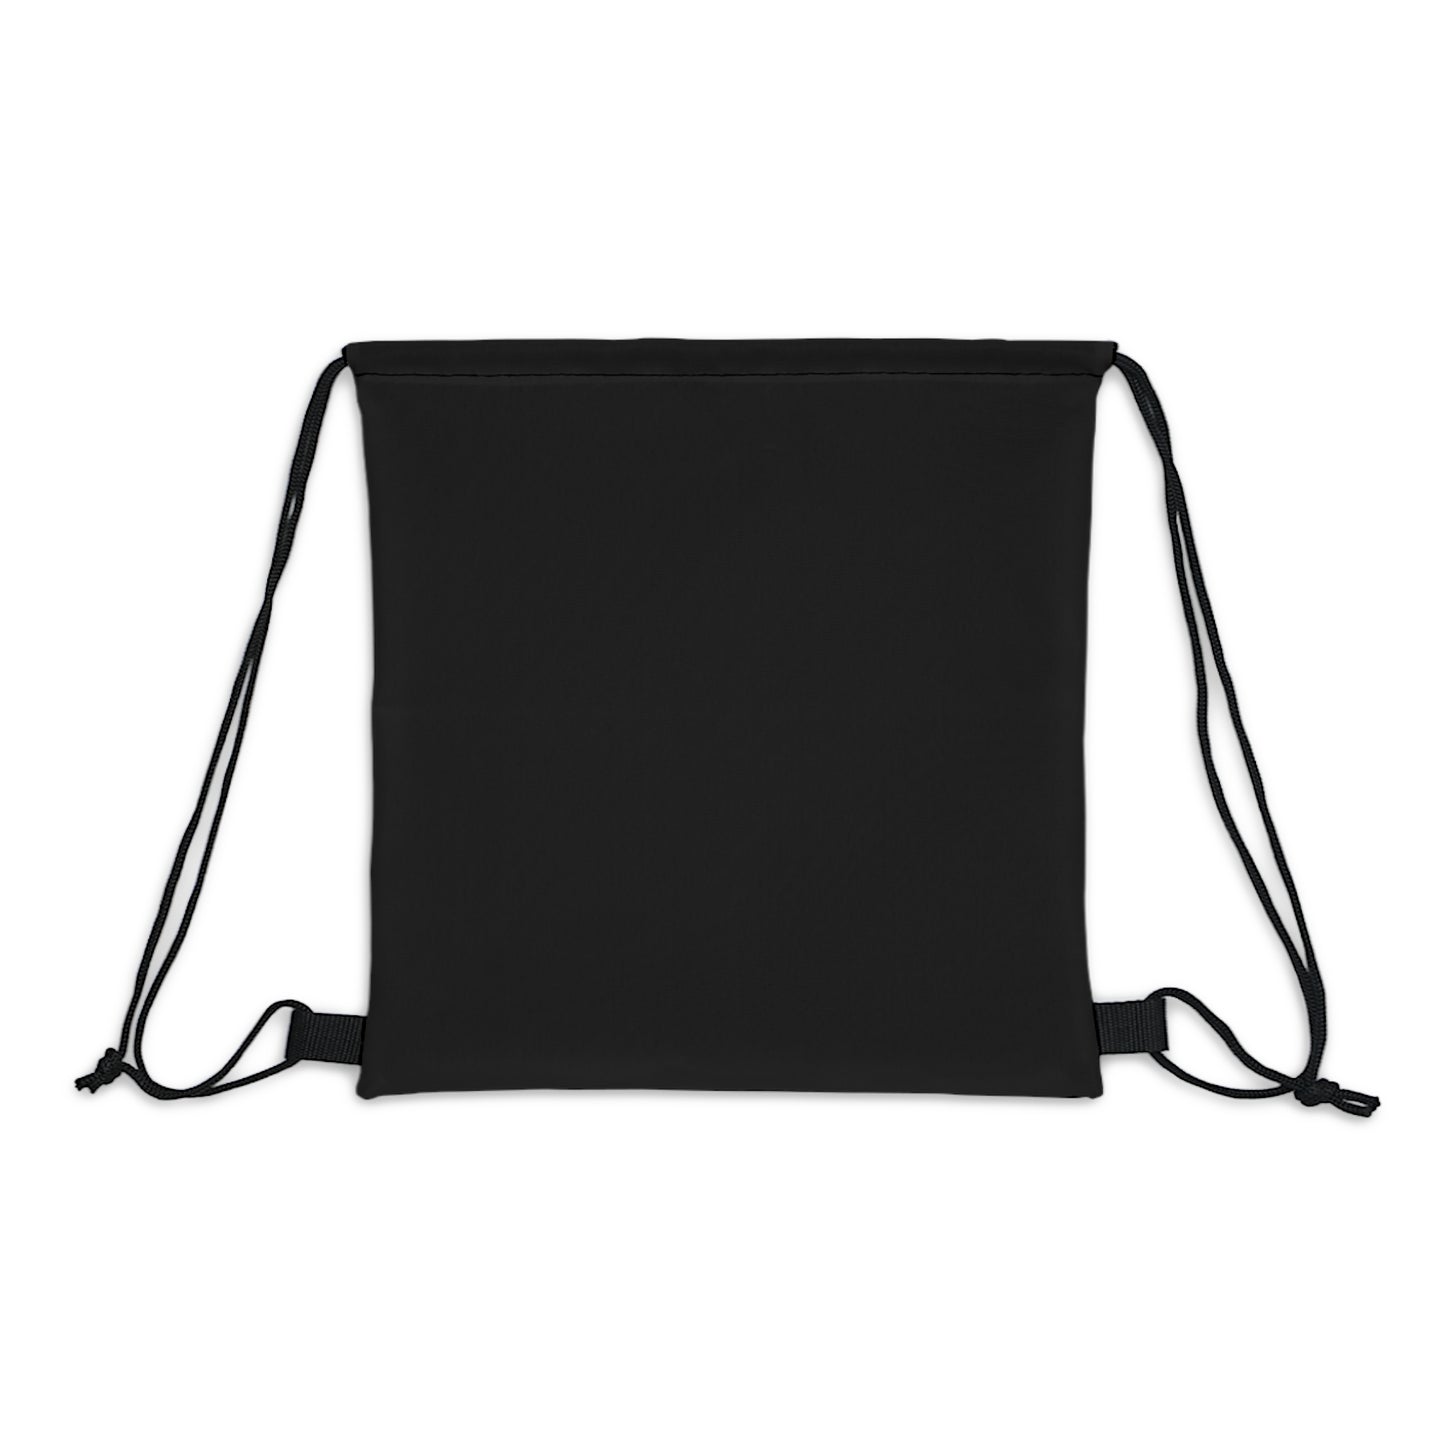 TGBTG Outdoor Drawstring Bag Black